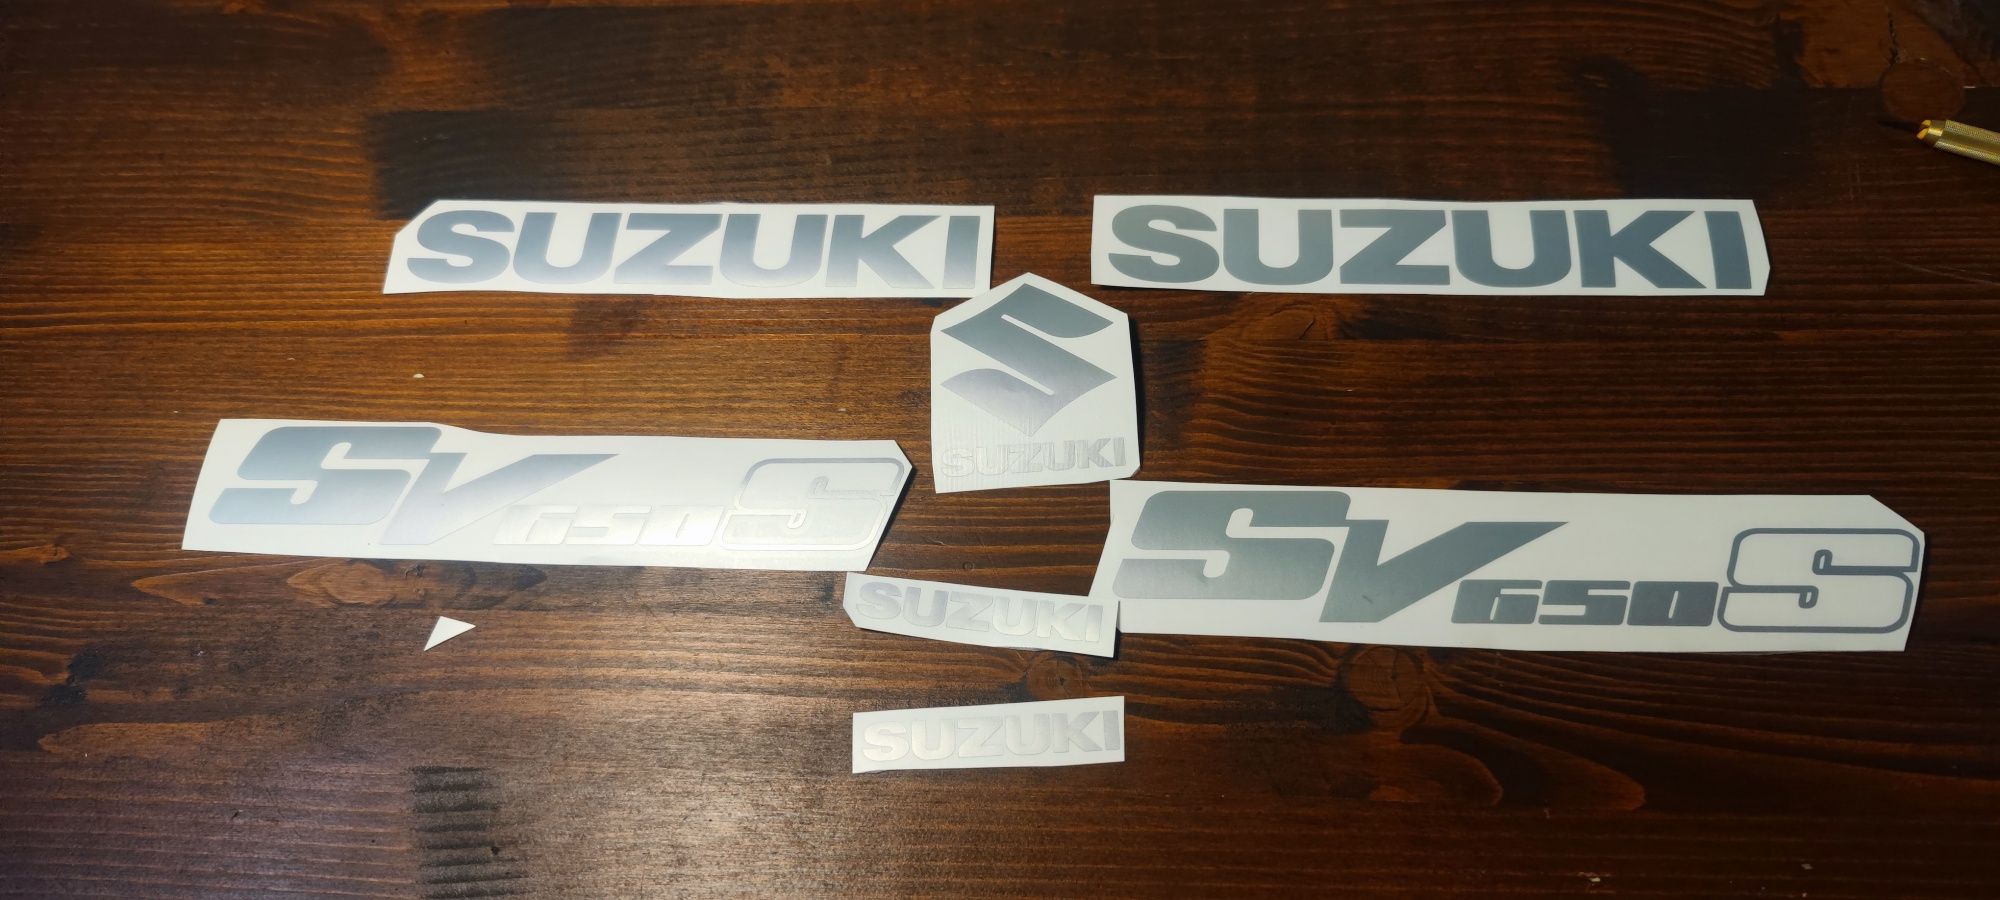 Kit stickere moto / autocolant  suzuki sv650 650s dimensiuni originale